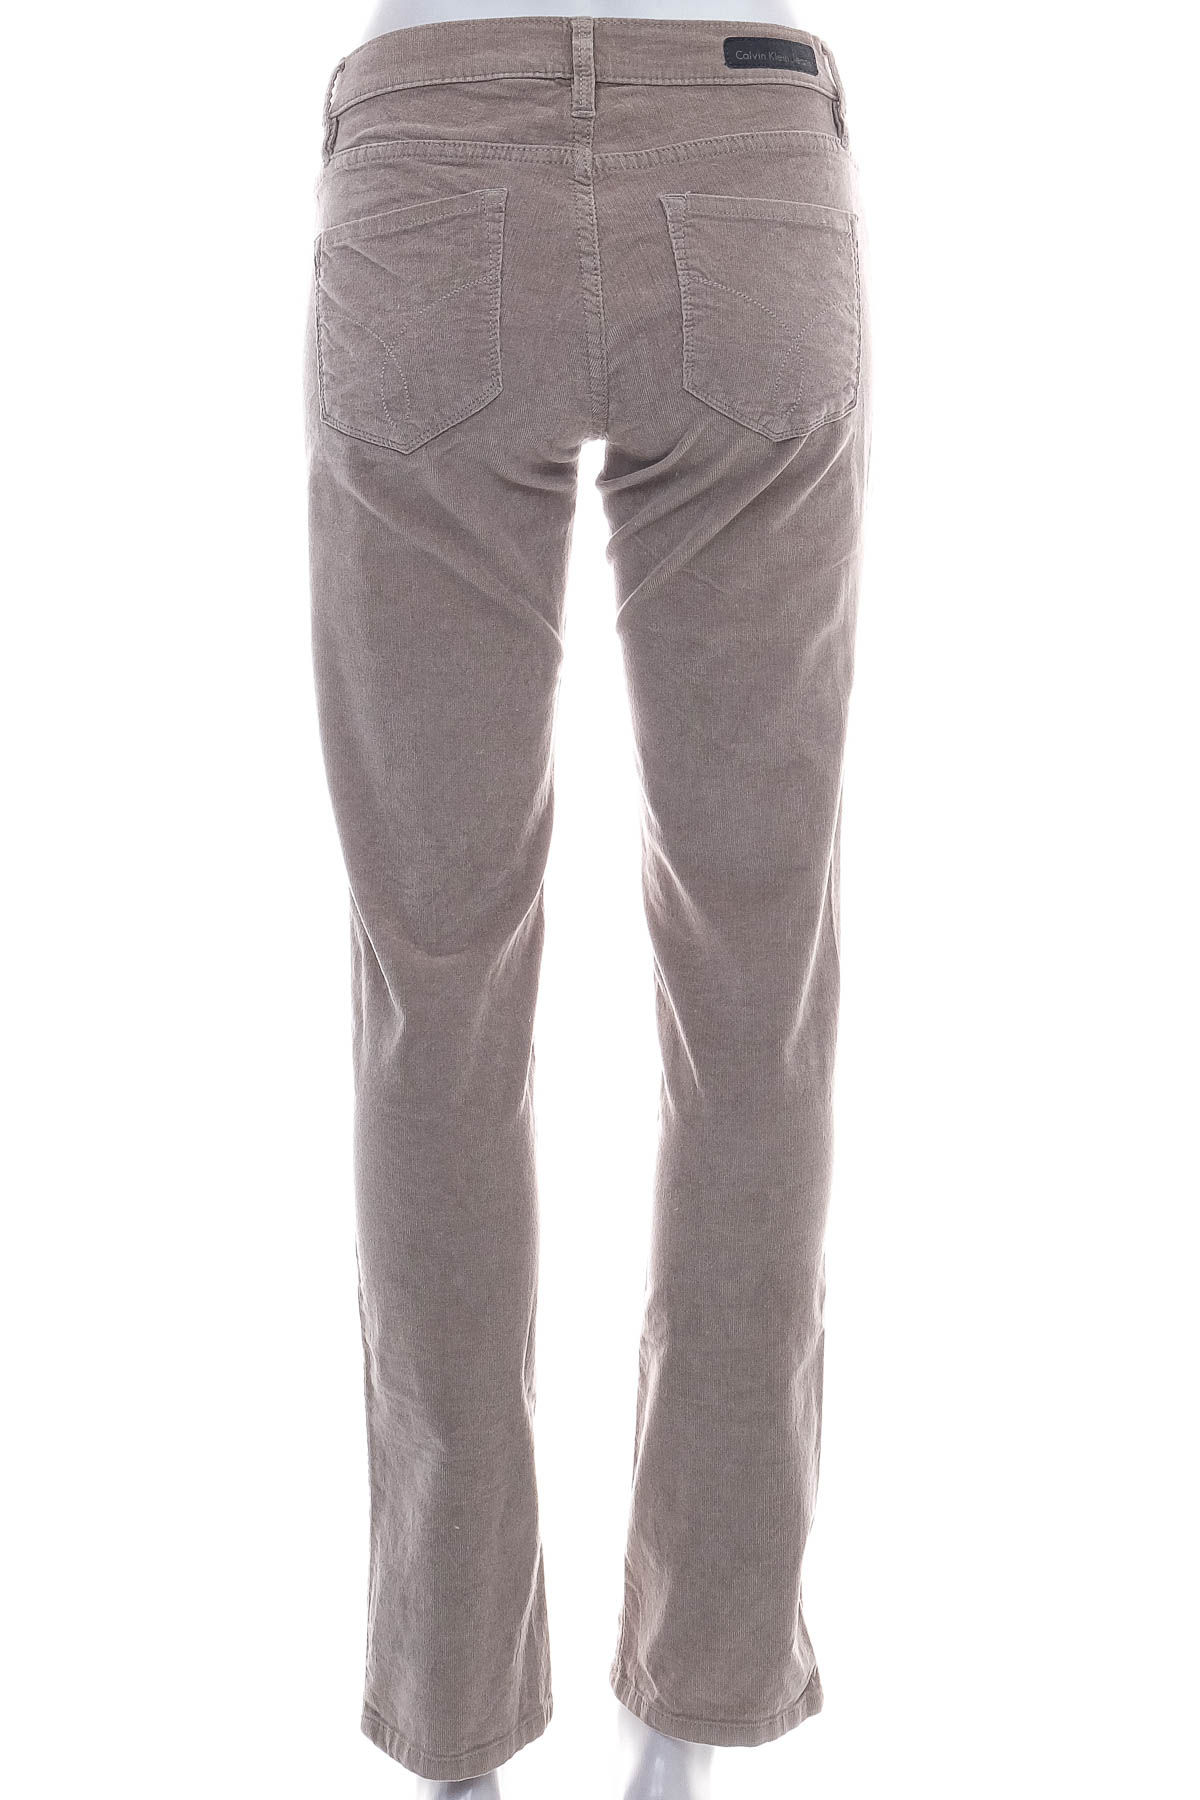 Women's trousers - Calvin Klein Jeans - 1